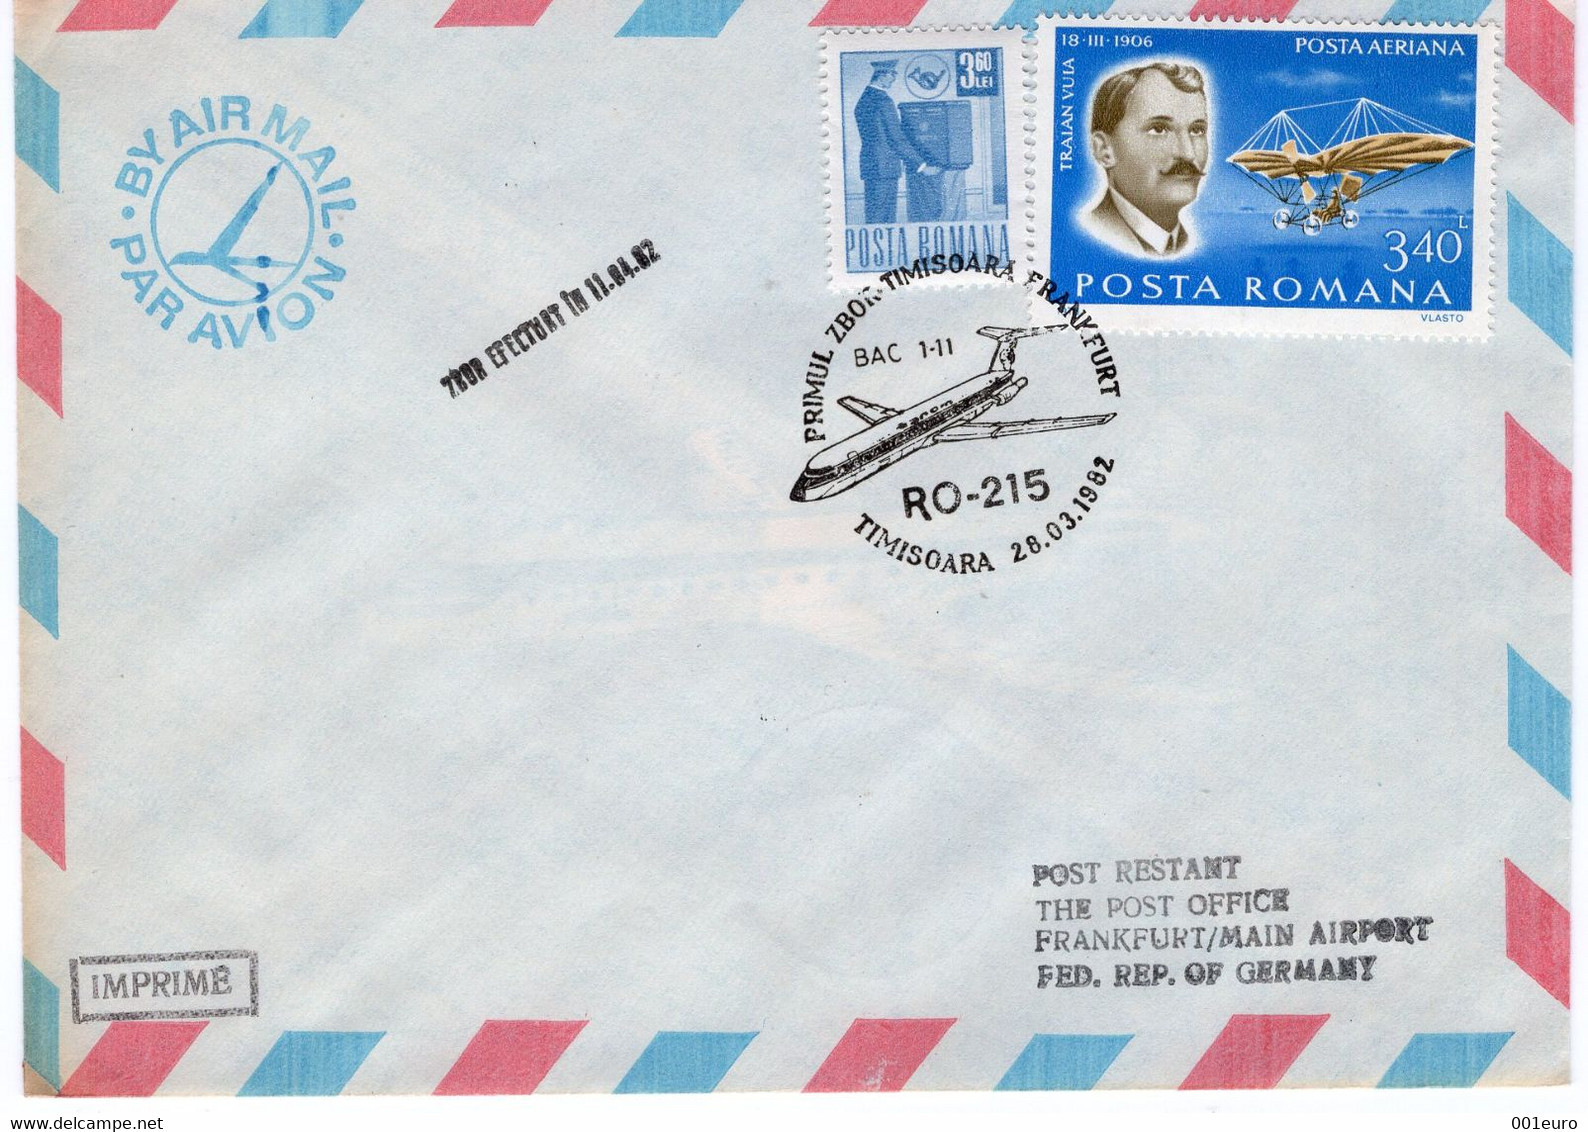 ROMANIA 1982: AEROPHILATELY - FLIGHT TIMISOARA - FRANKFURT, Illustrated Postmark On Cover  - Registered Shipping! - Marcophilie